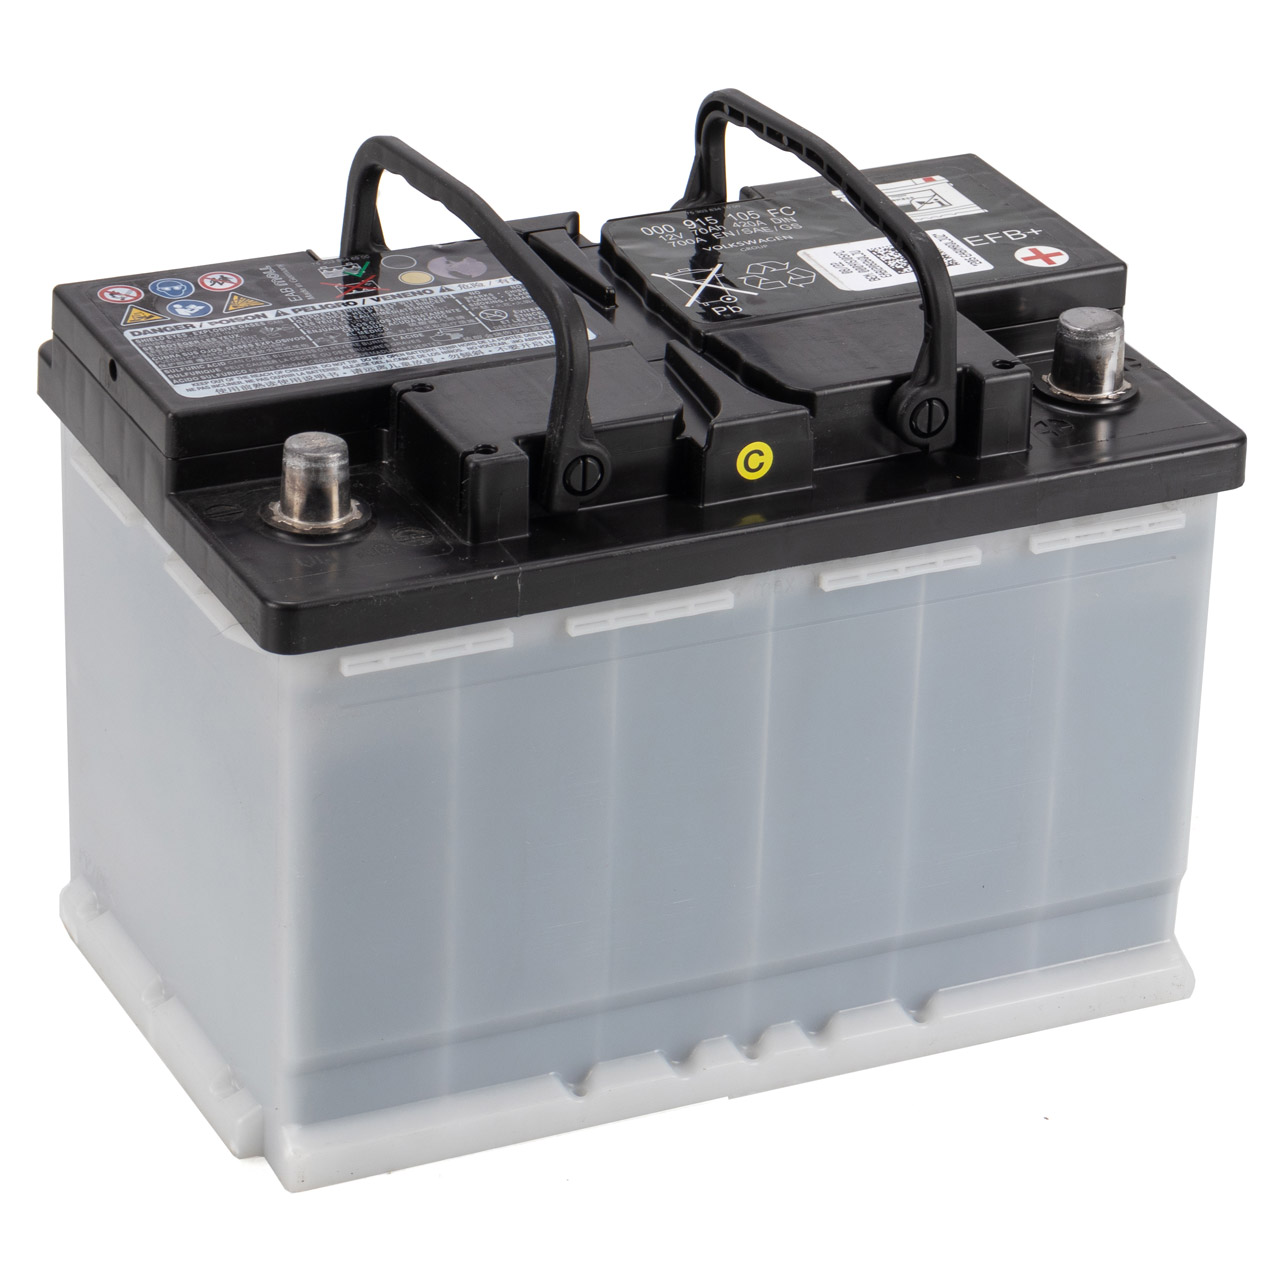 ORIGINAL VW Autobatterie Batterie Starterbatterie 12V 70Ah 420/700A 000915105FC